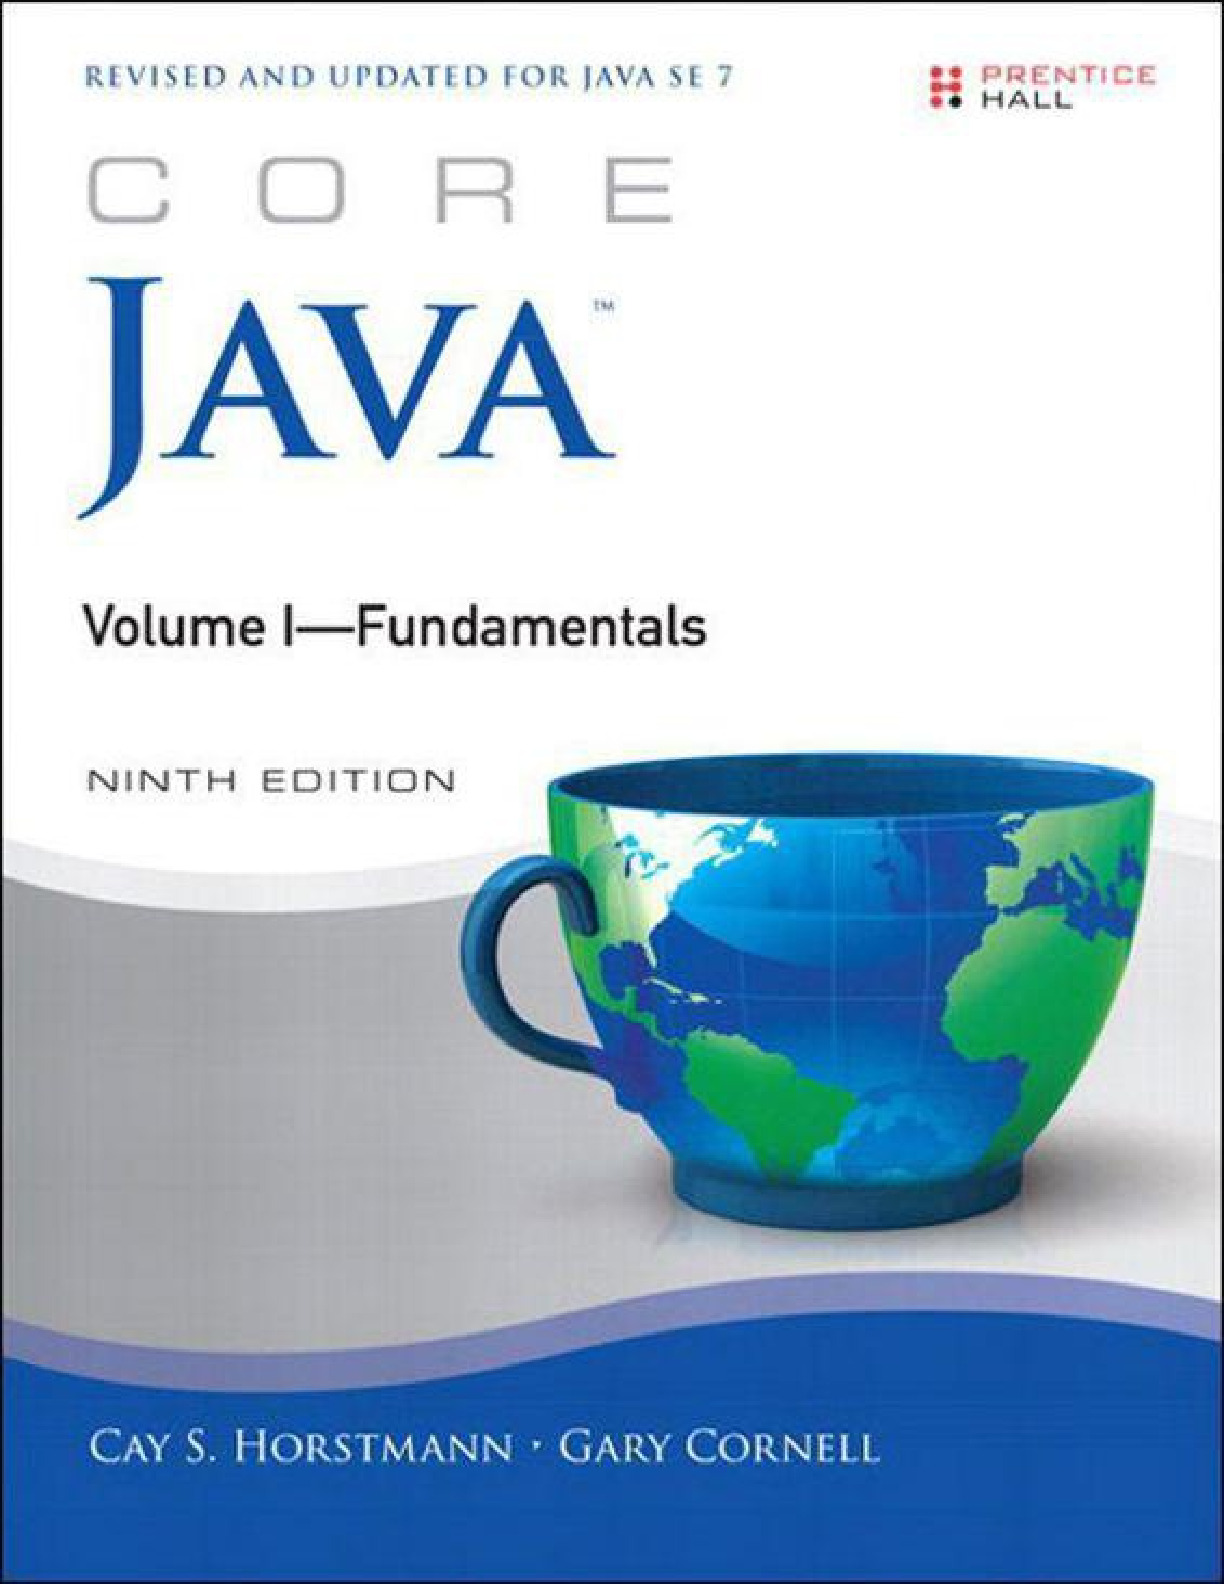 Core Java Volume I- Fundamentals 9th Edition- Horstmann, Cay S. & Cornell, Gary_2013